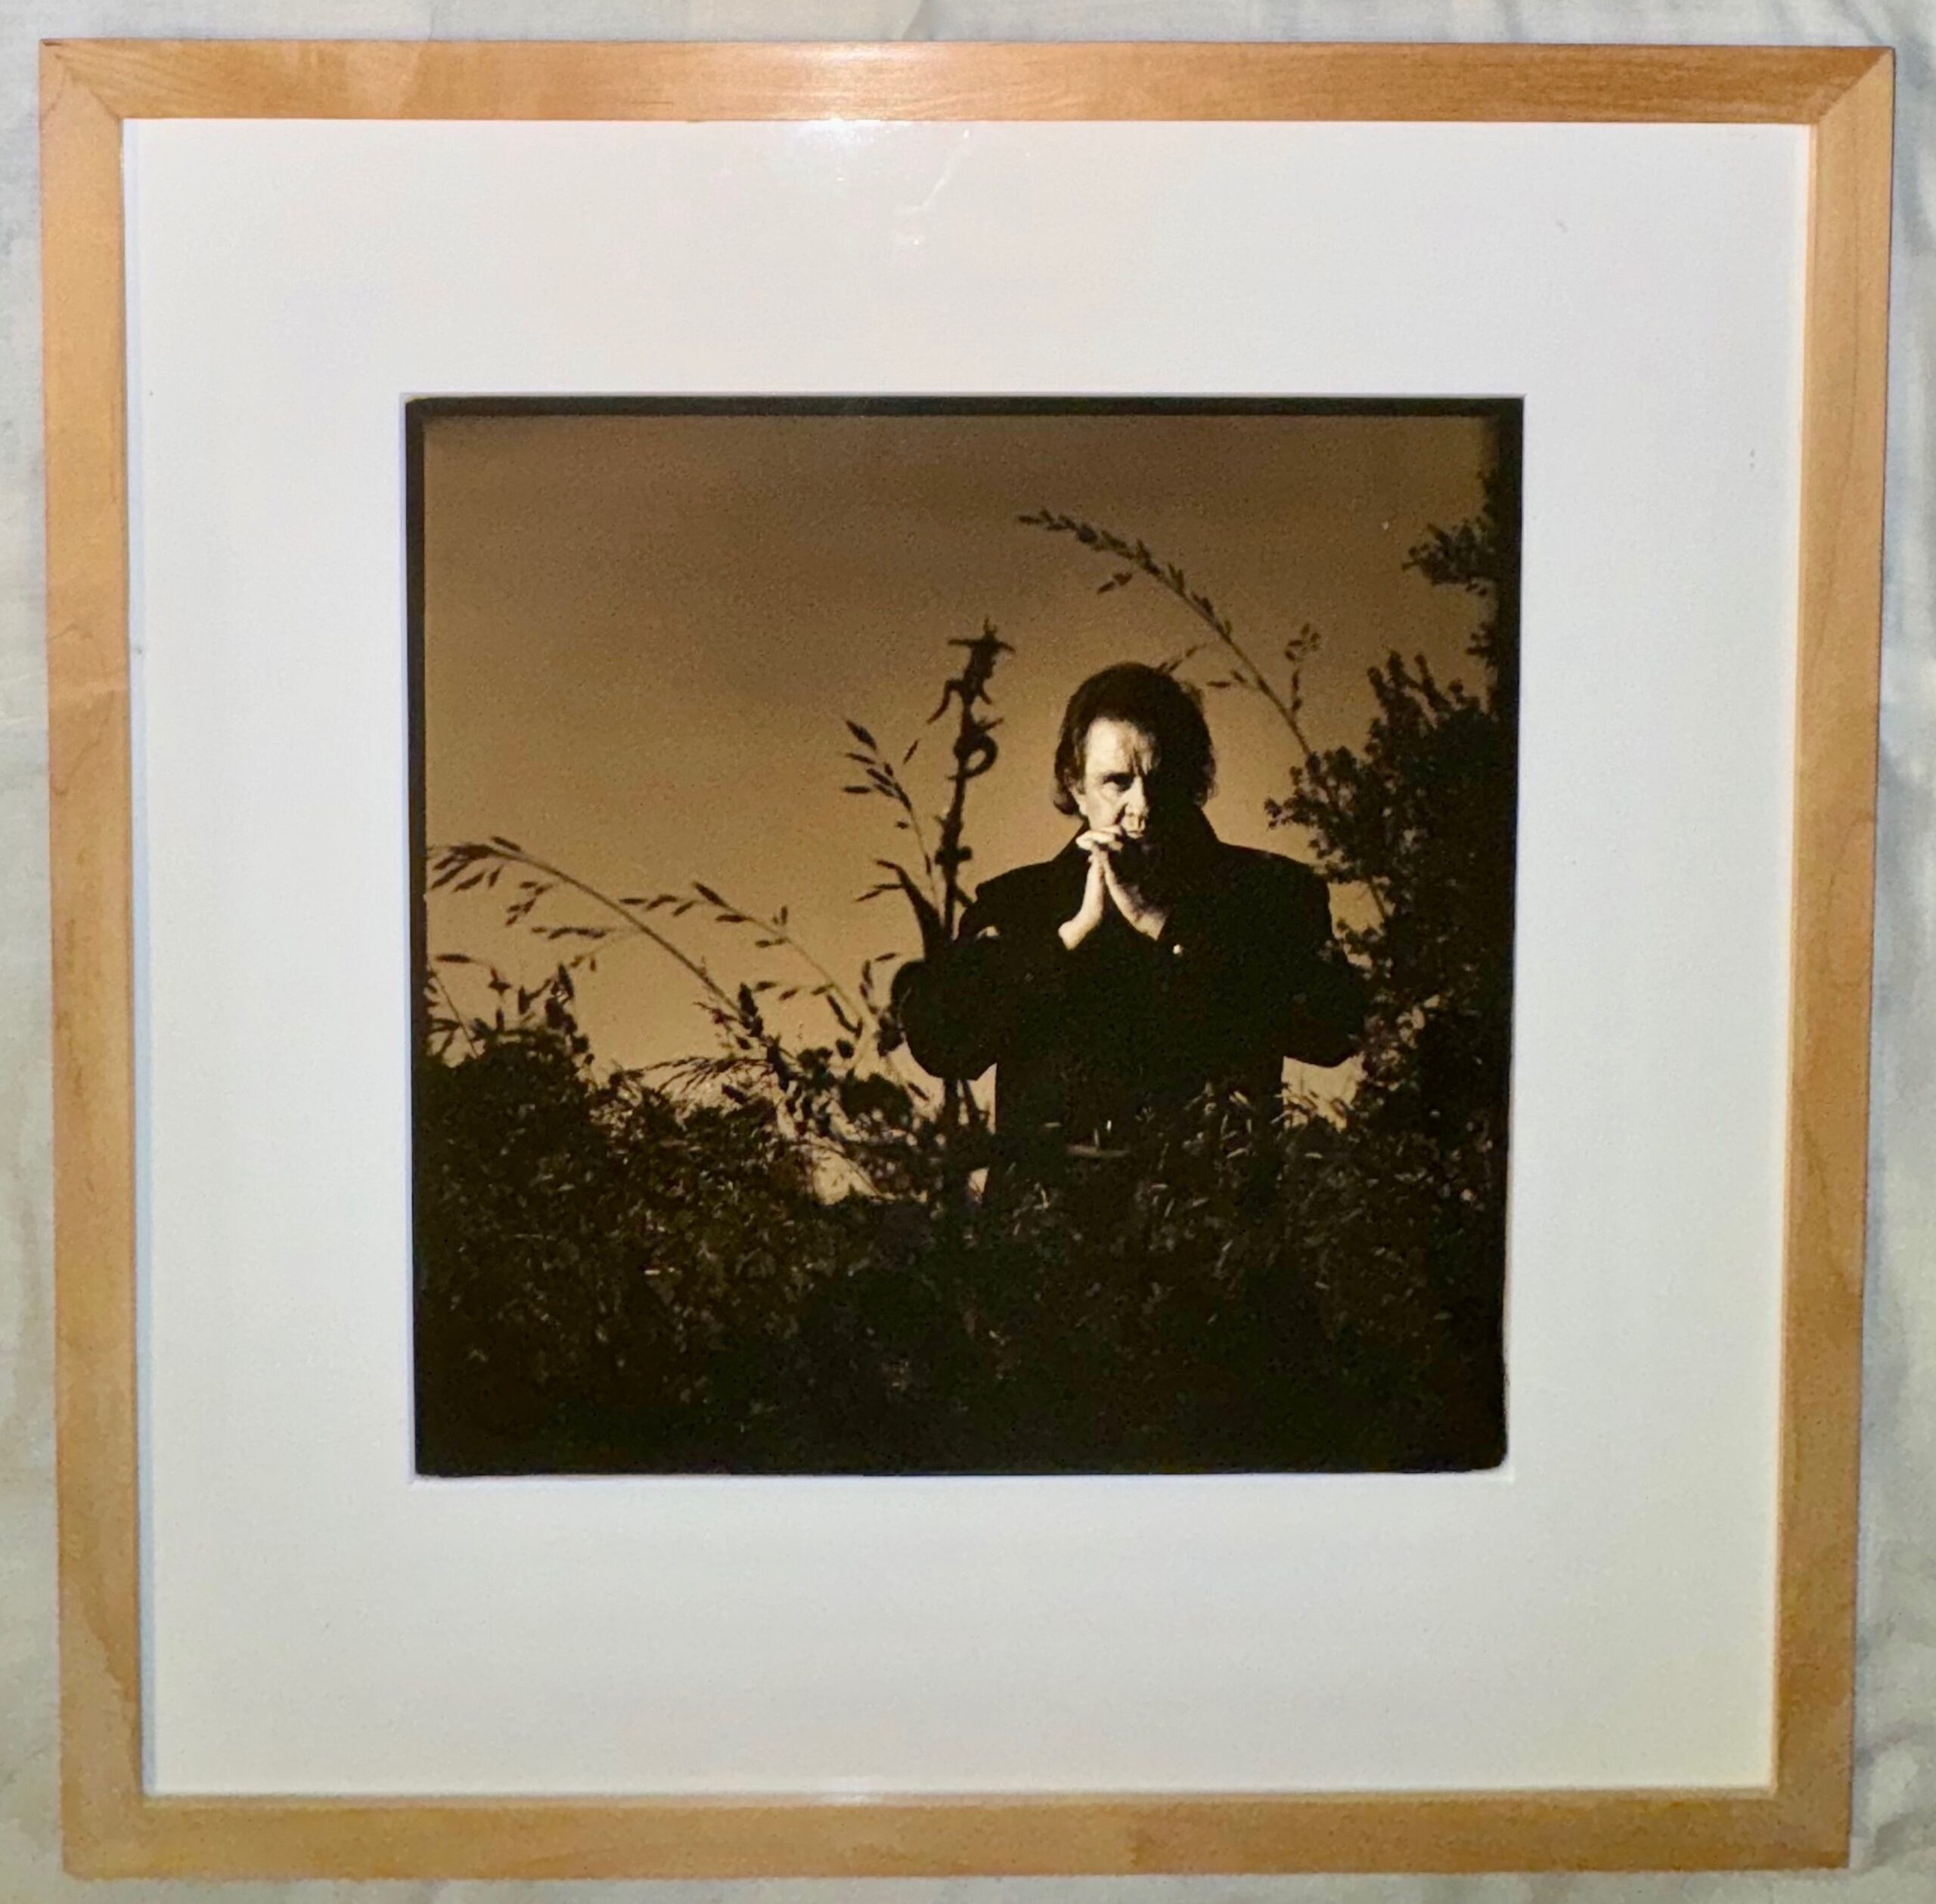 Johnny Cash Photo, Signed Michael Grecco, 1994